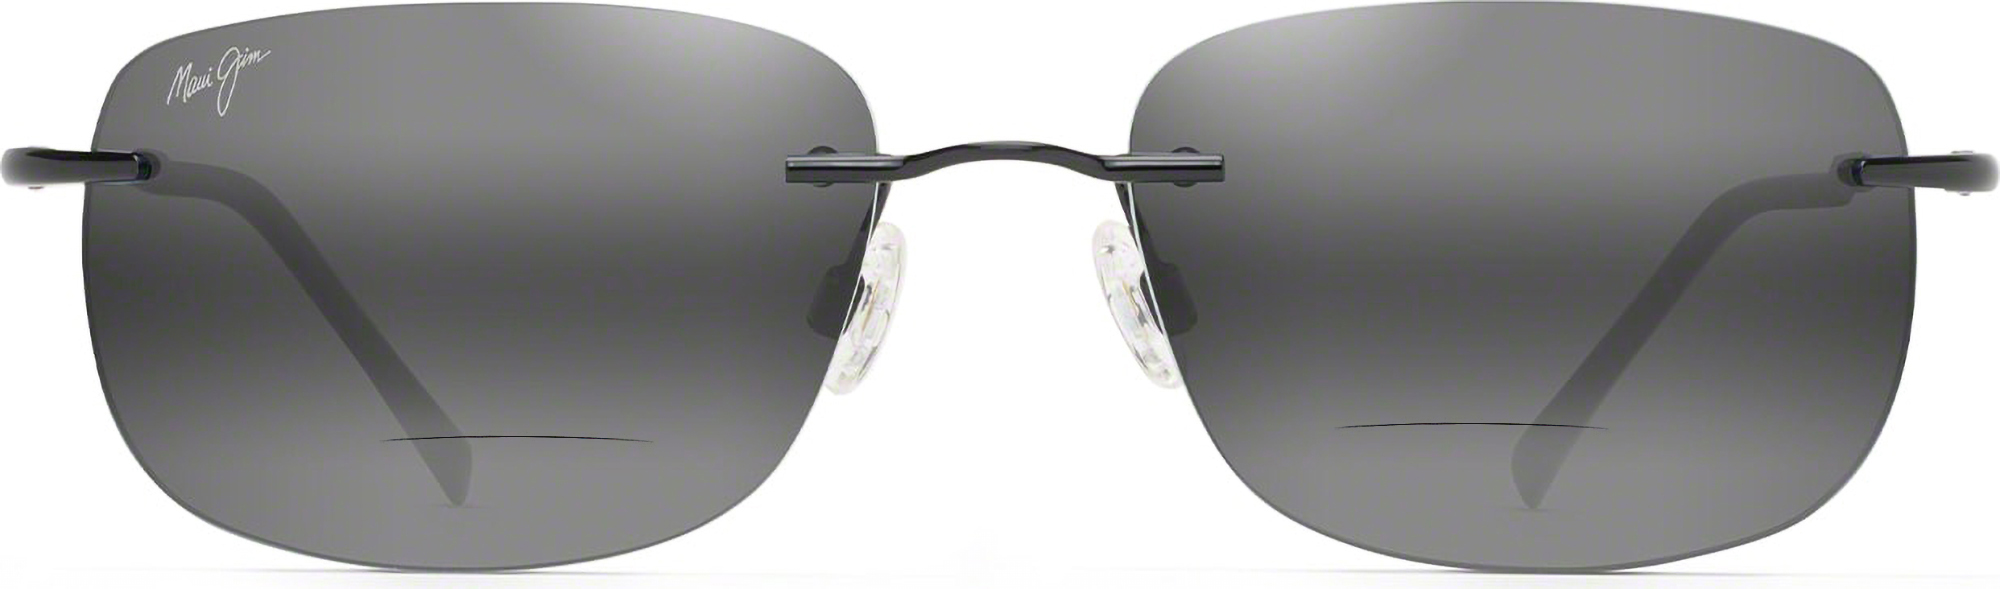 proSPORT Polarized Bifocal Reading Sunglasses Men 2.50 Grey Polycarbonate Polarised lens Durable High Nickel Metal Frame